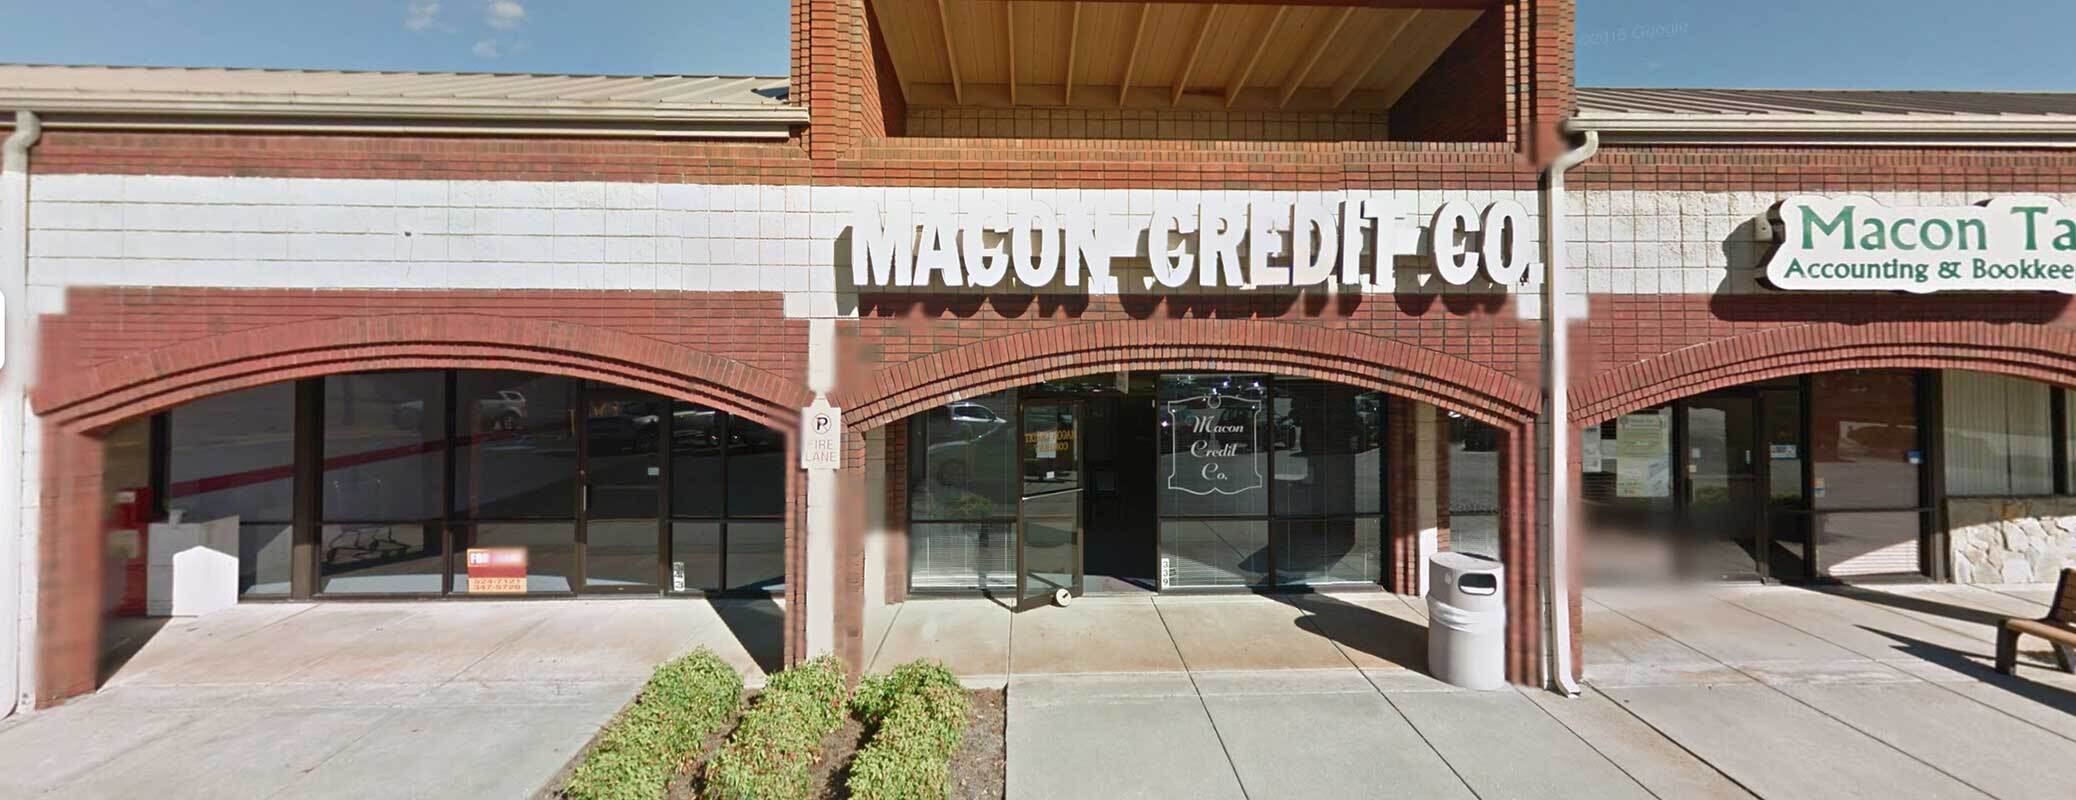 Macon Credit Company